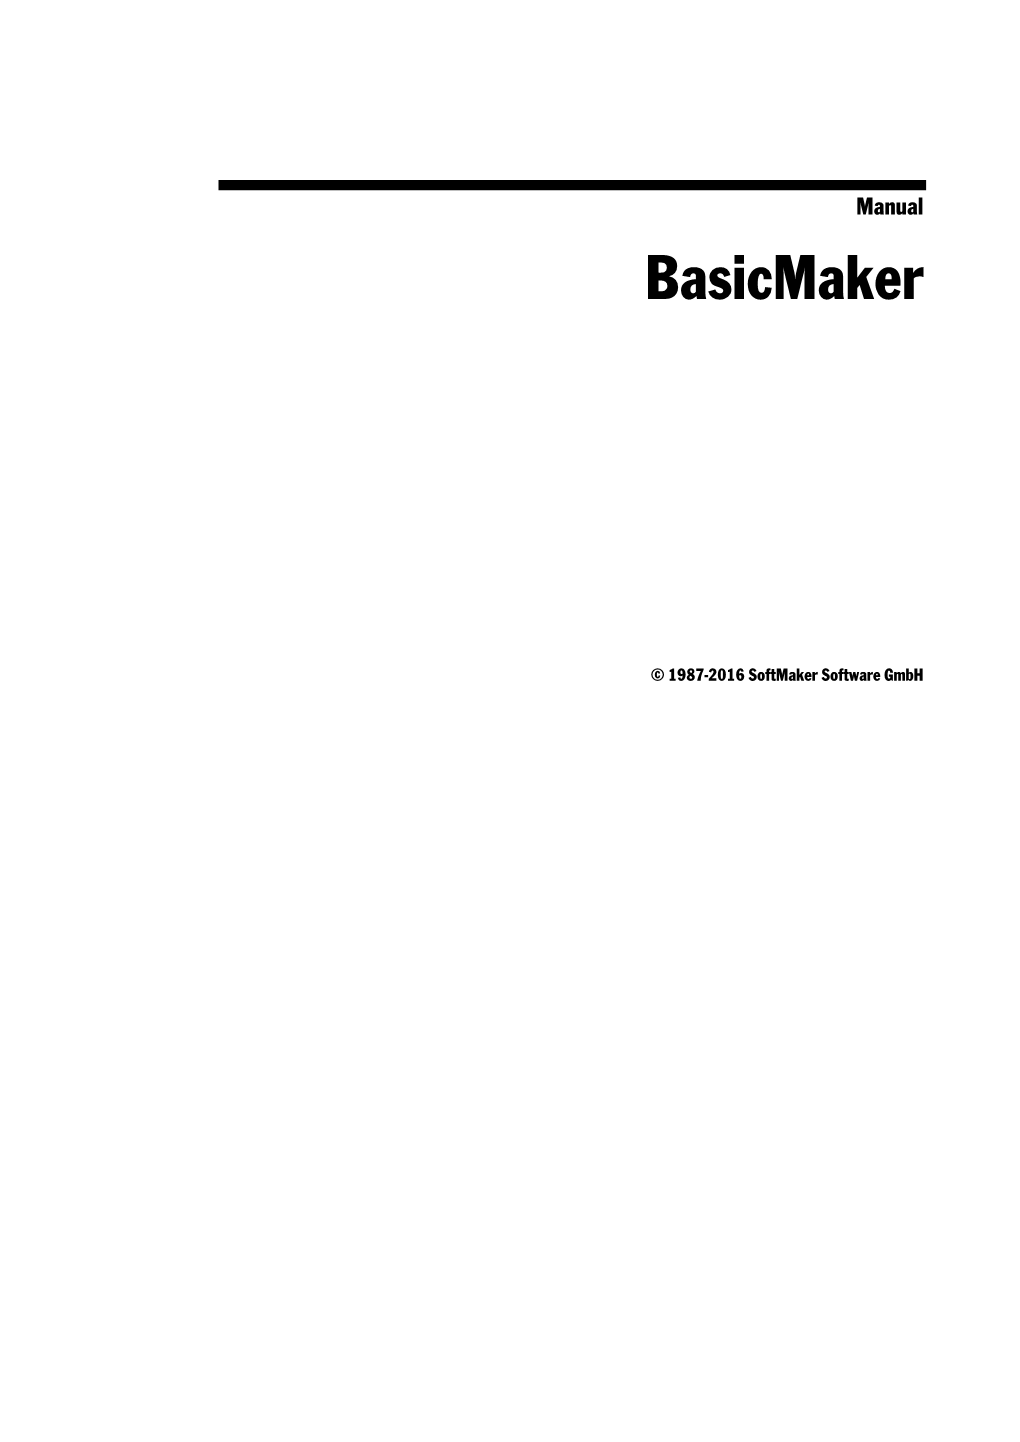 Manual Basicmaker